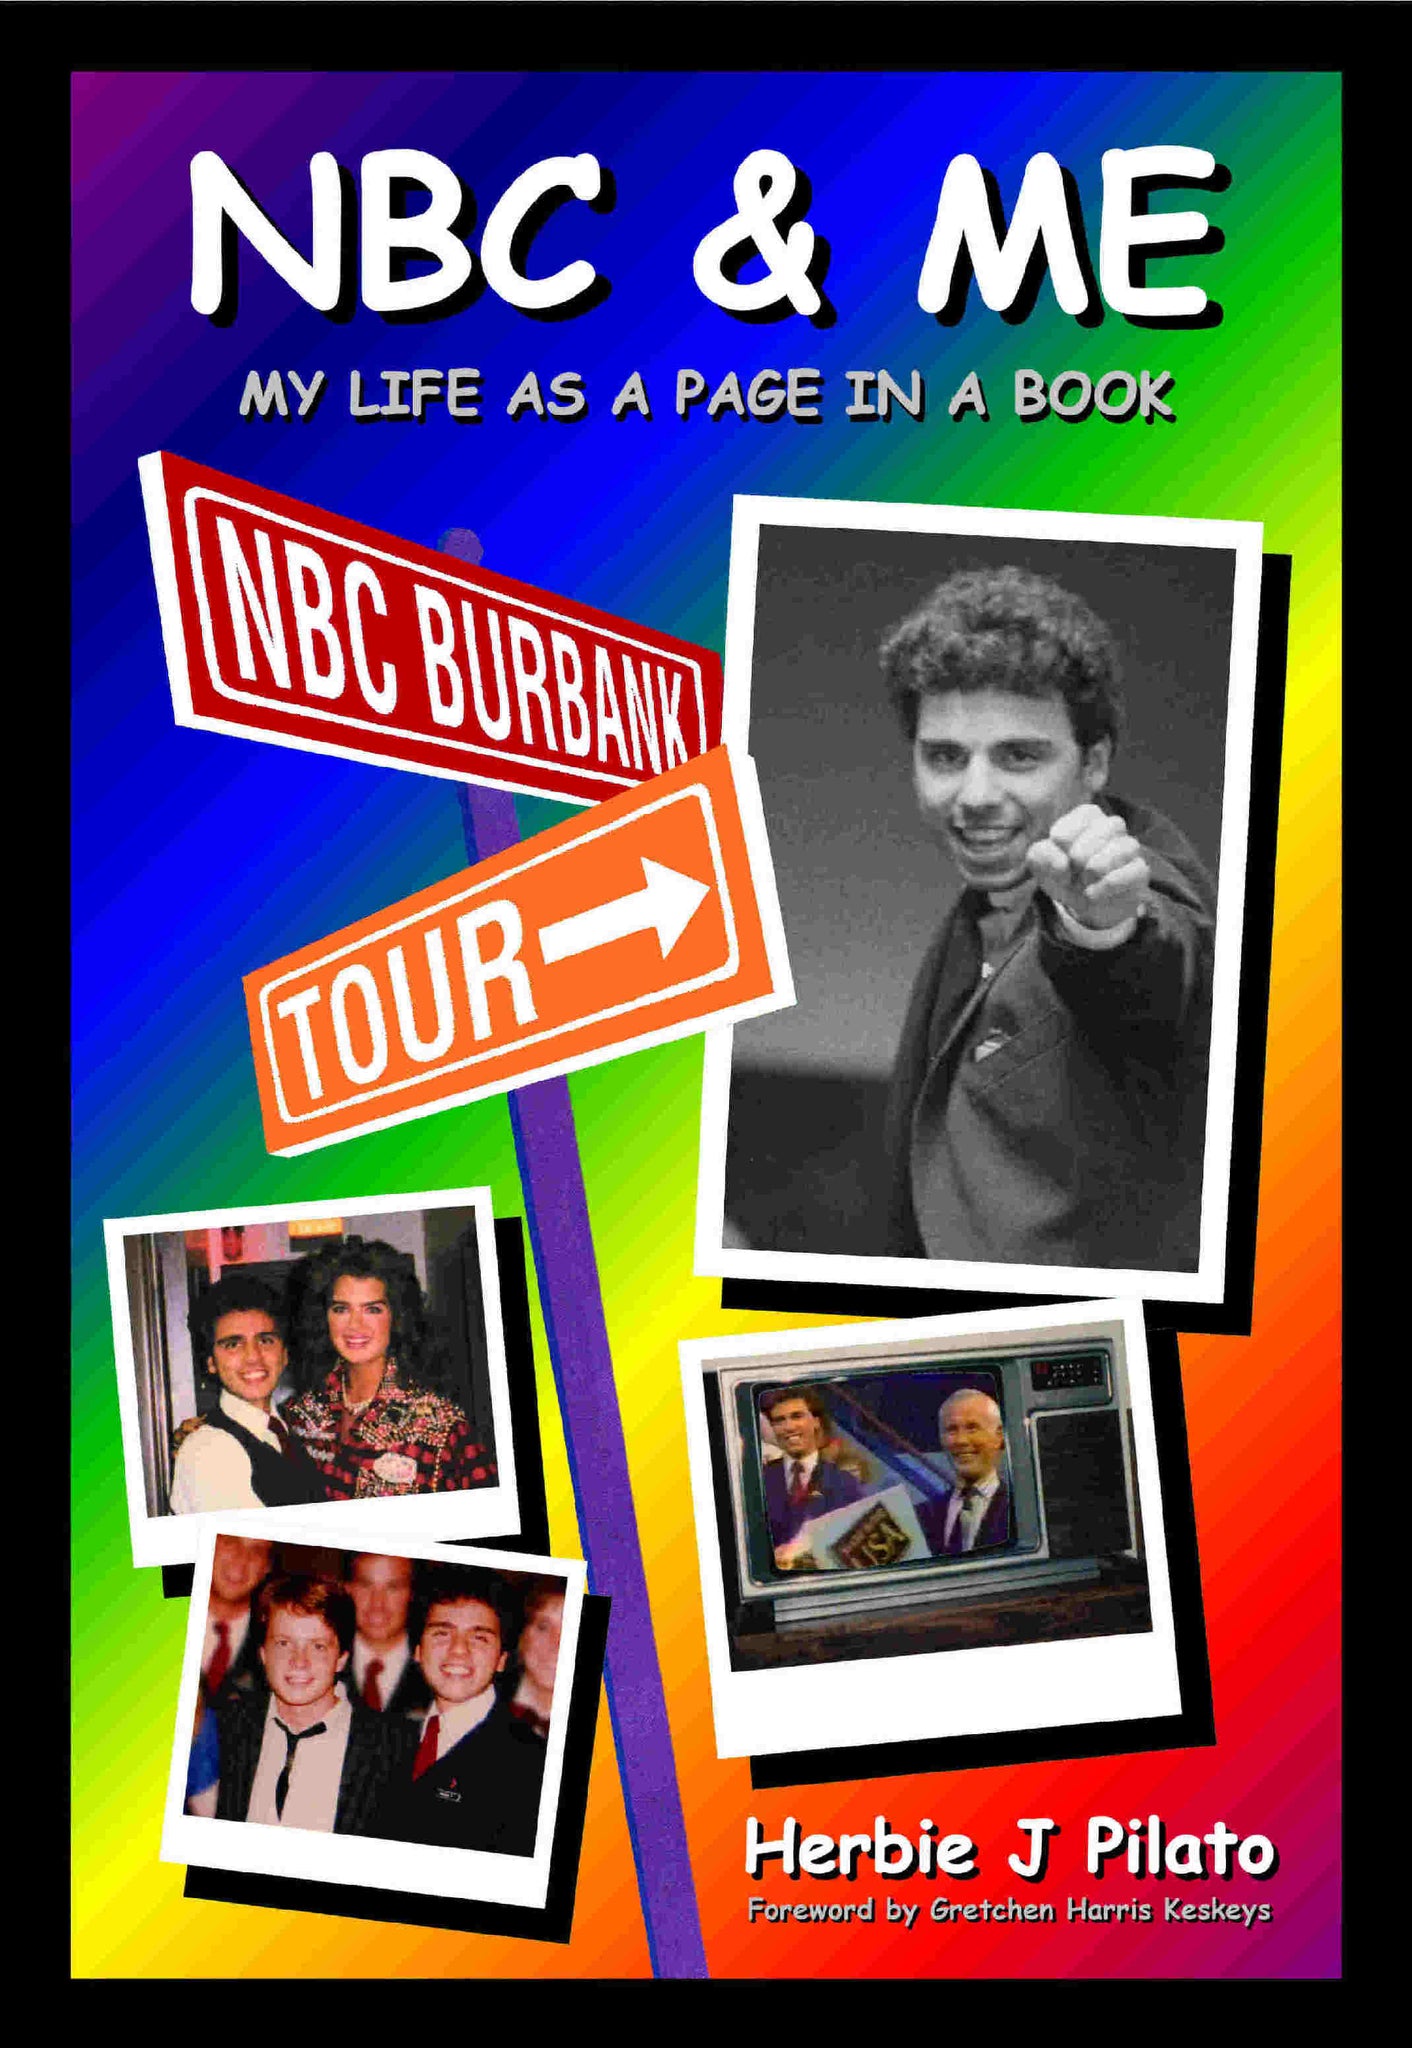 NBC & ME: MY LIFE AS A PAGE IN A BOOK by Herbie J Pilato - BearManor Manor